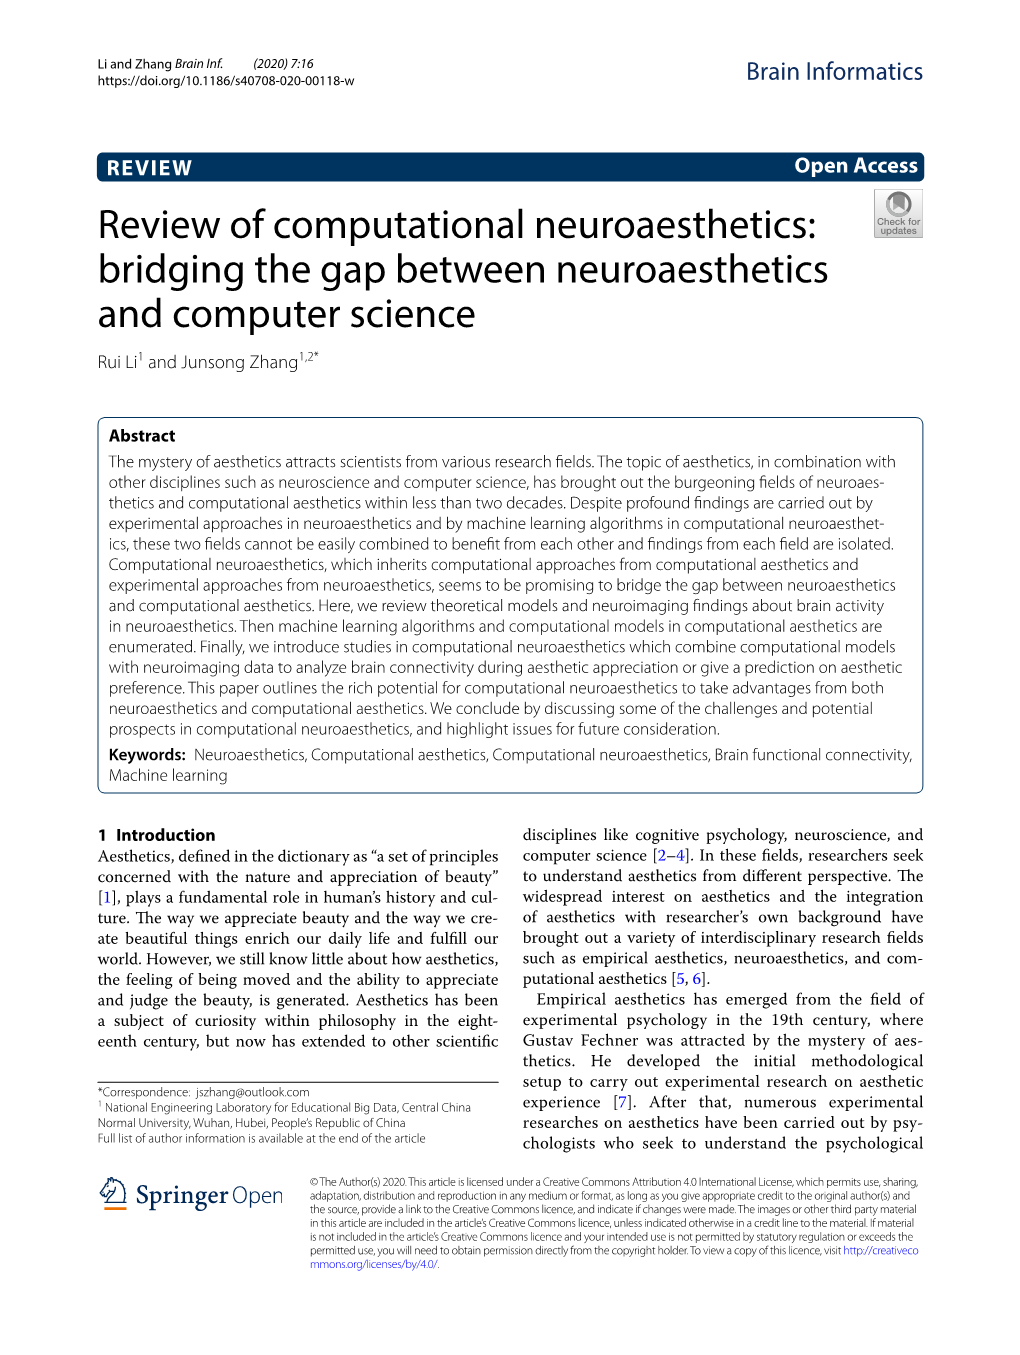 Review of Computational Neuroaesthetics: Bridging the Gap Between Neuroaesthetics and Computer Science Rui Li1 and Junsong Zhang1,2*